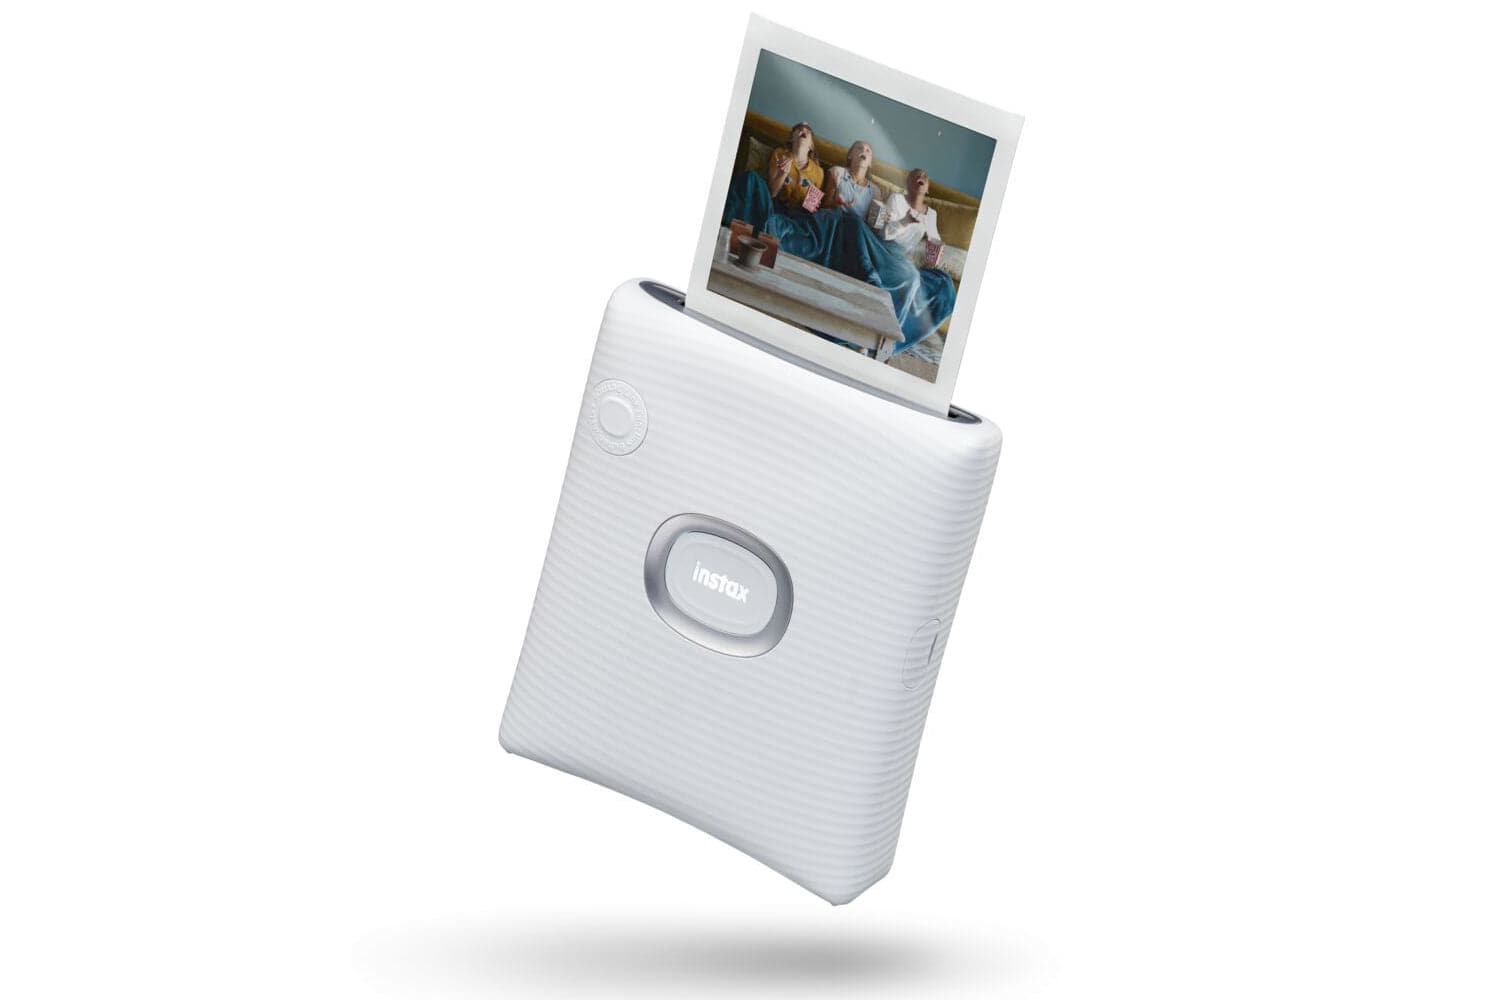 Fujifilm Instax Square Link Wireless Smartphone Photo Printer - White (Printer Only)